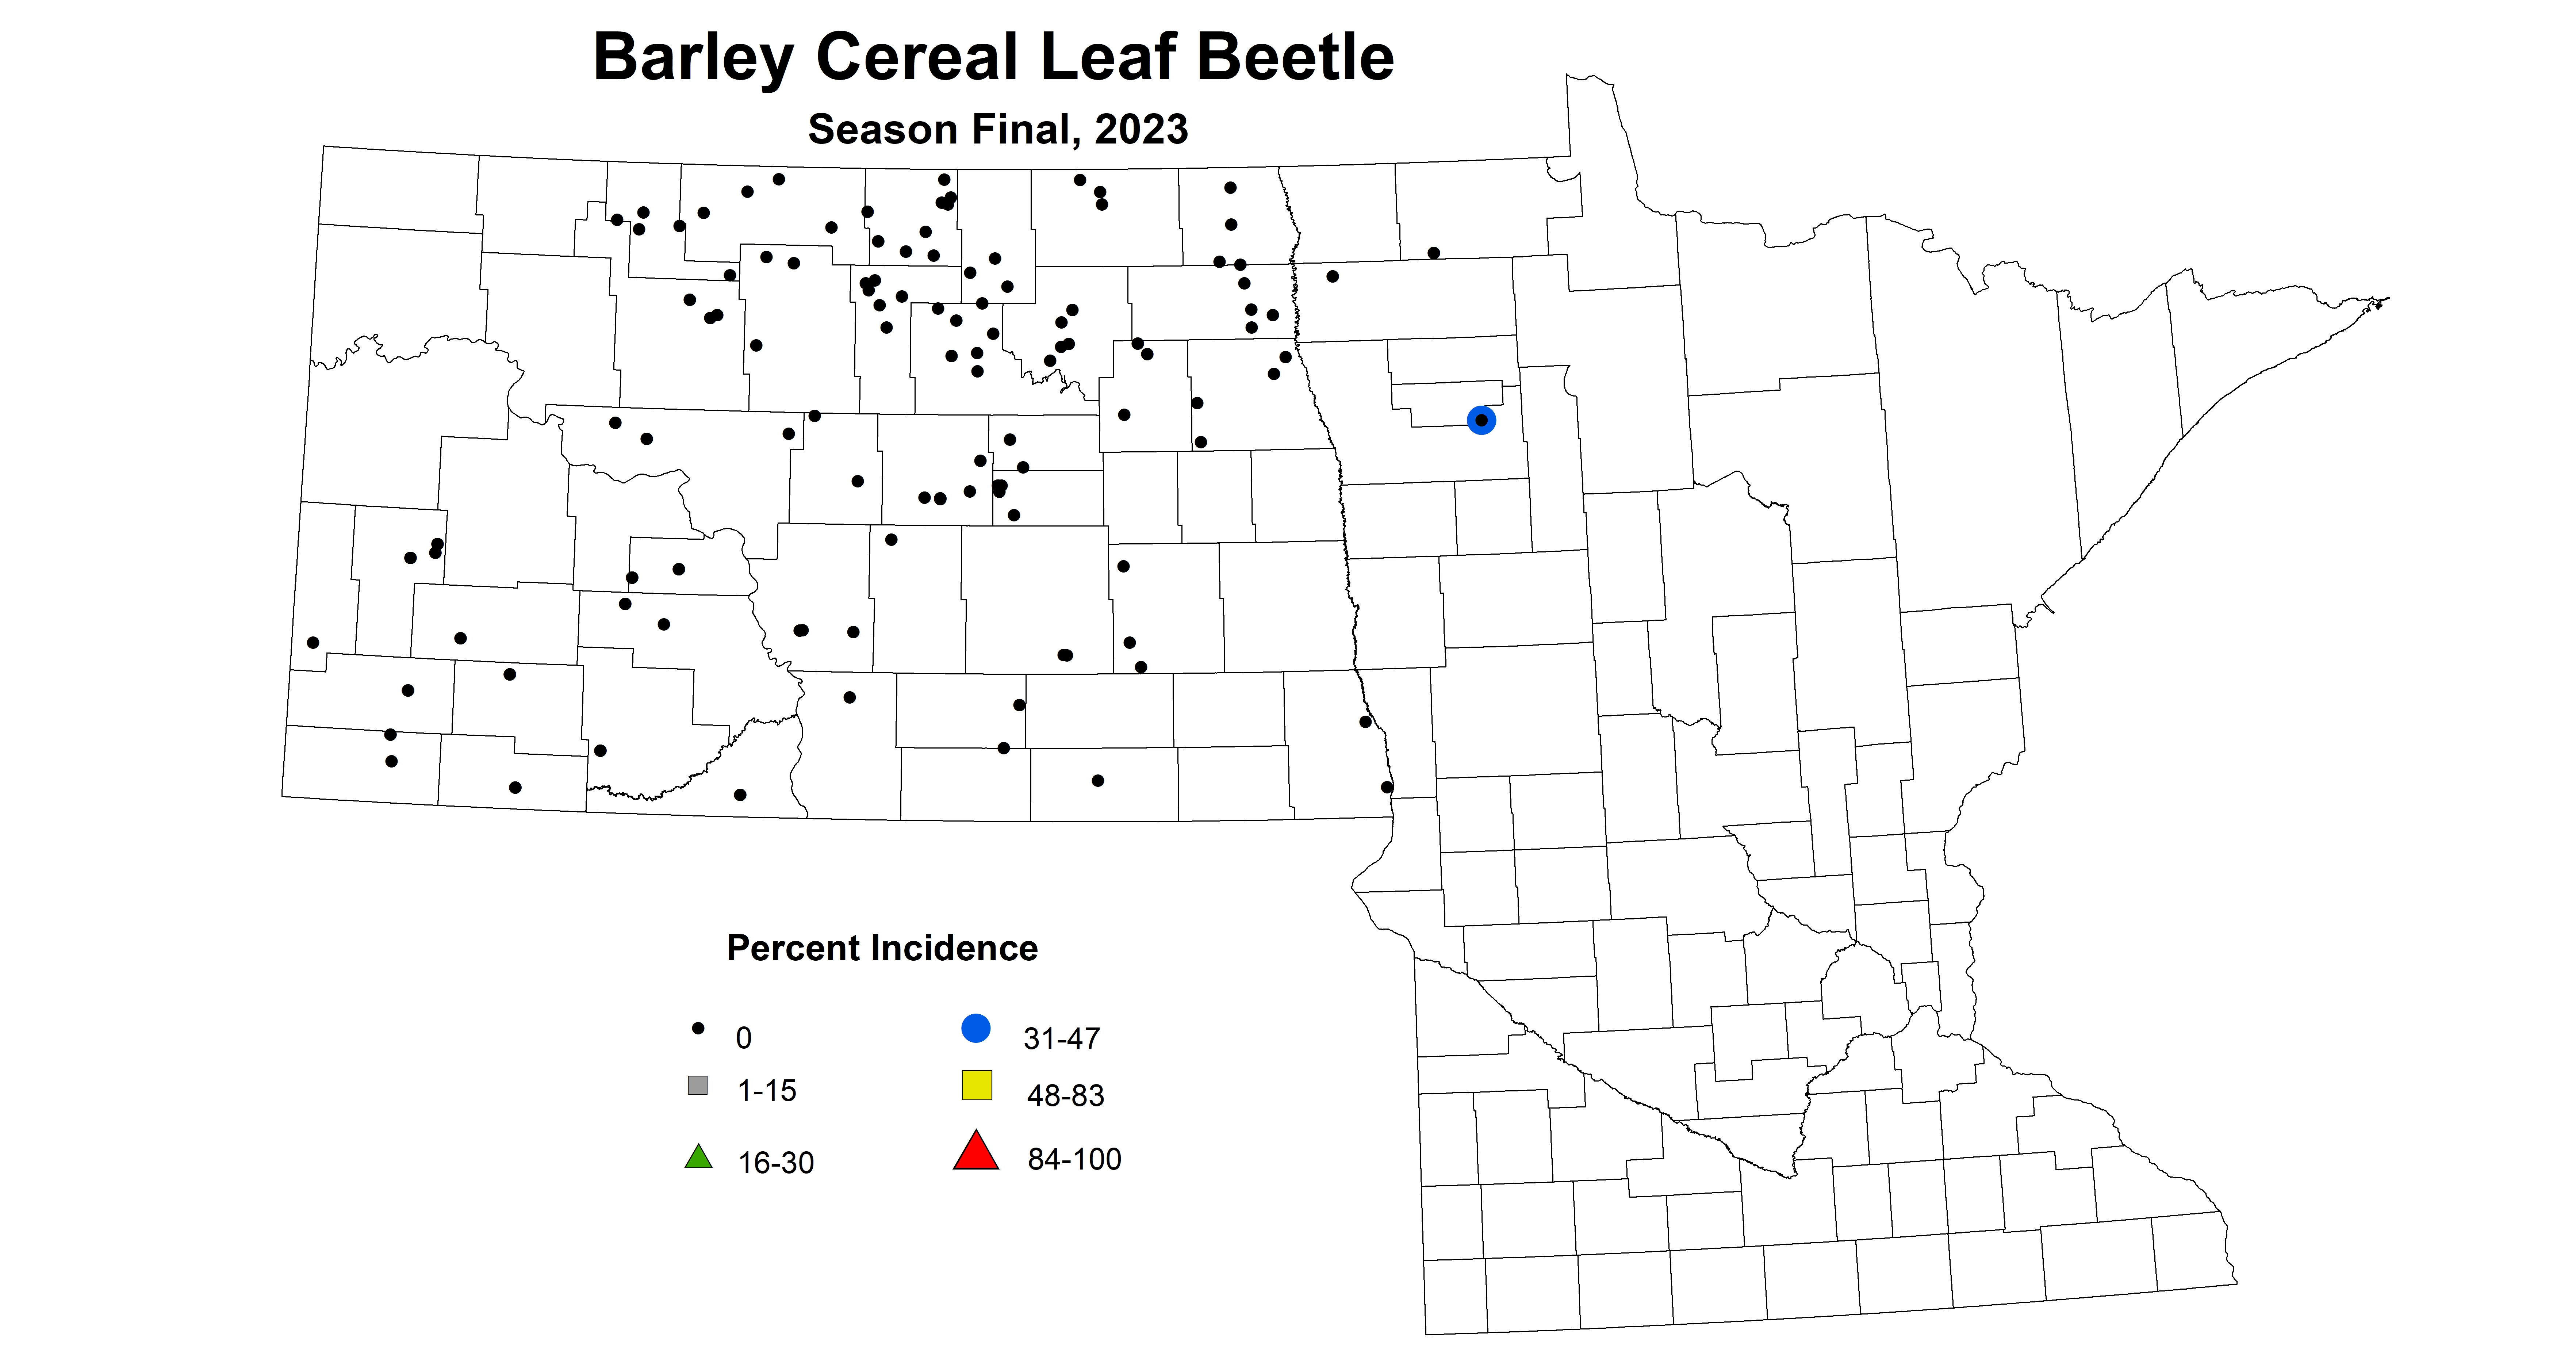 barley cereal leaf beetle season final 2023